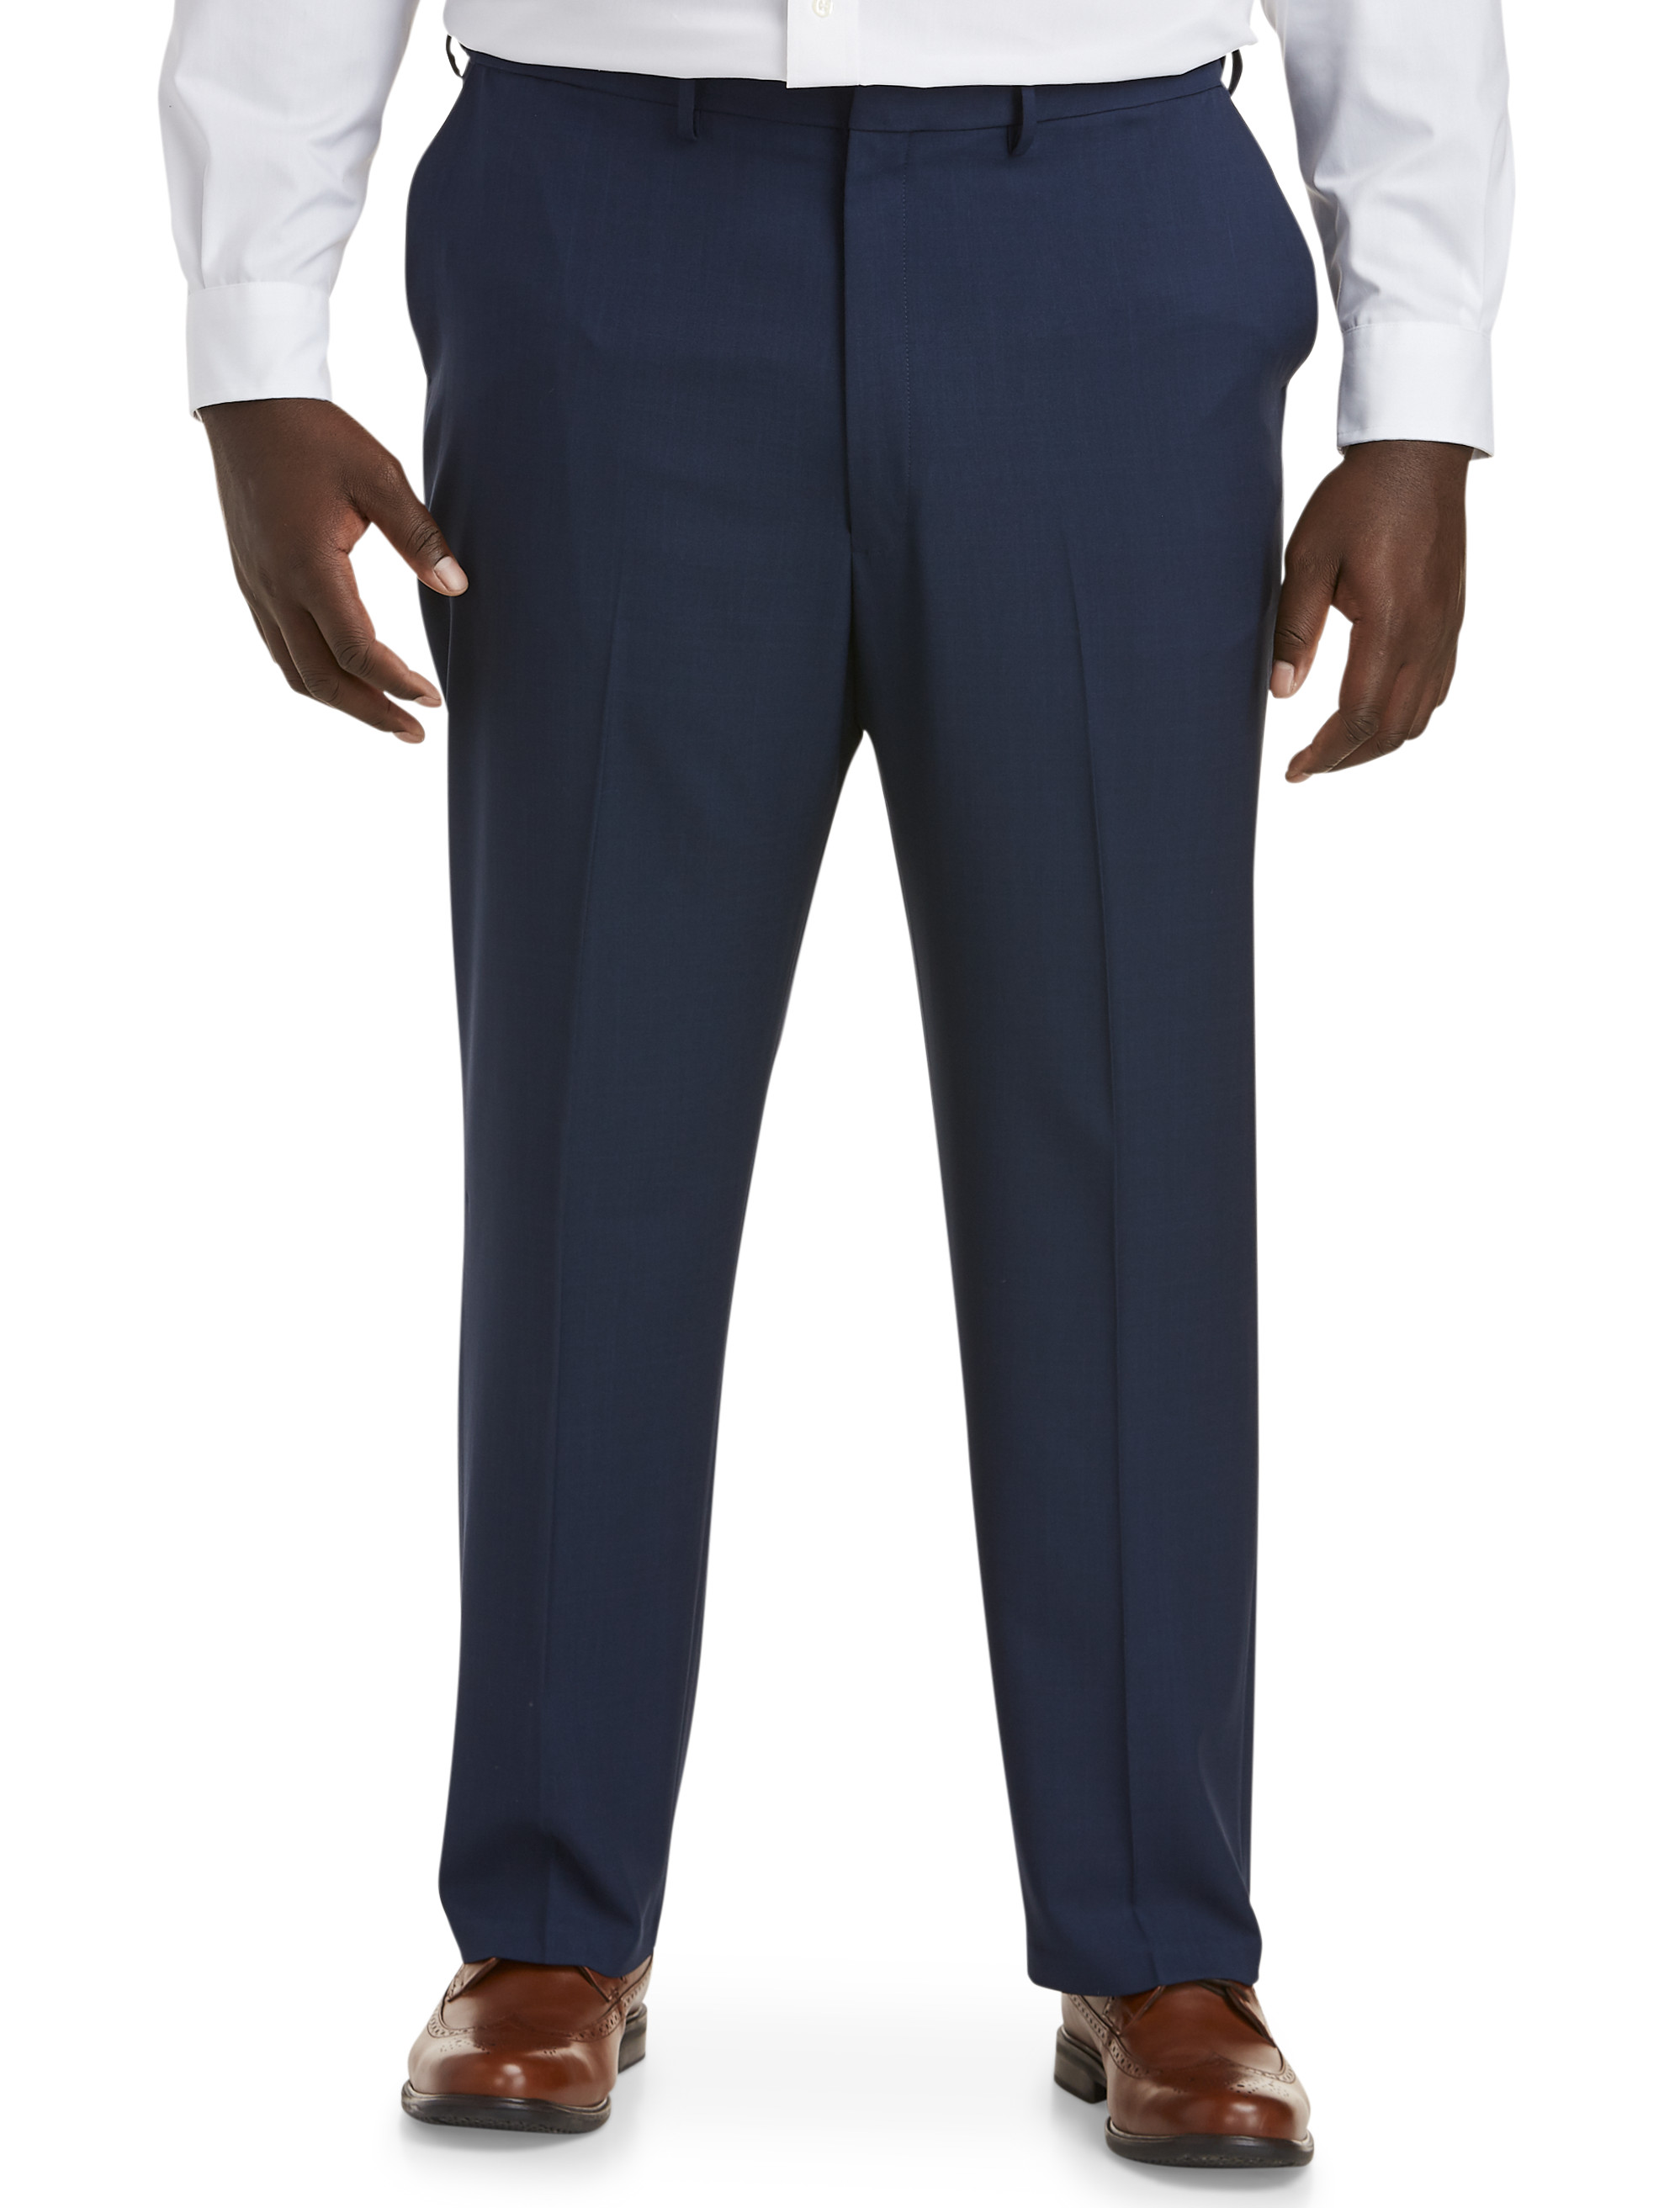 Big + Tall, Haggar Premium Comfort 4-Way Stretch Dress Pants